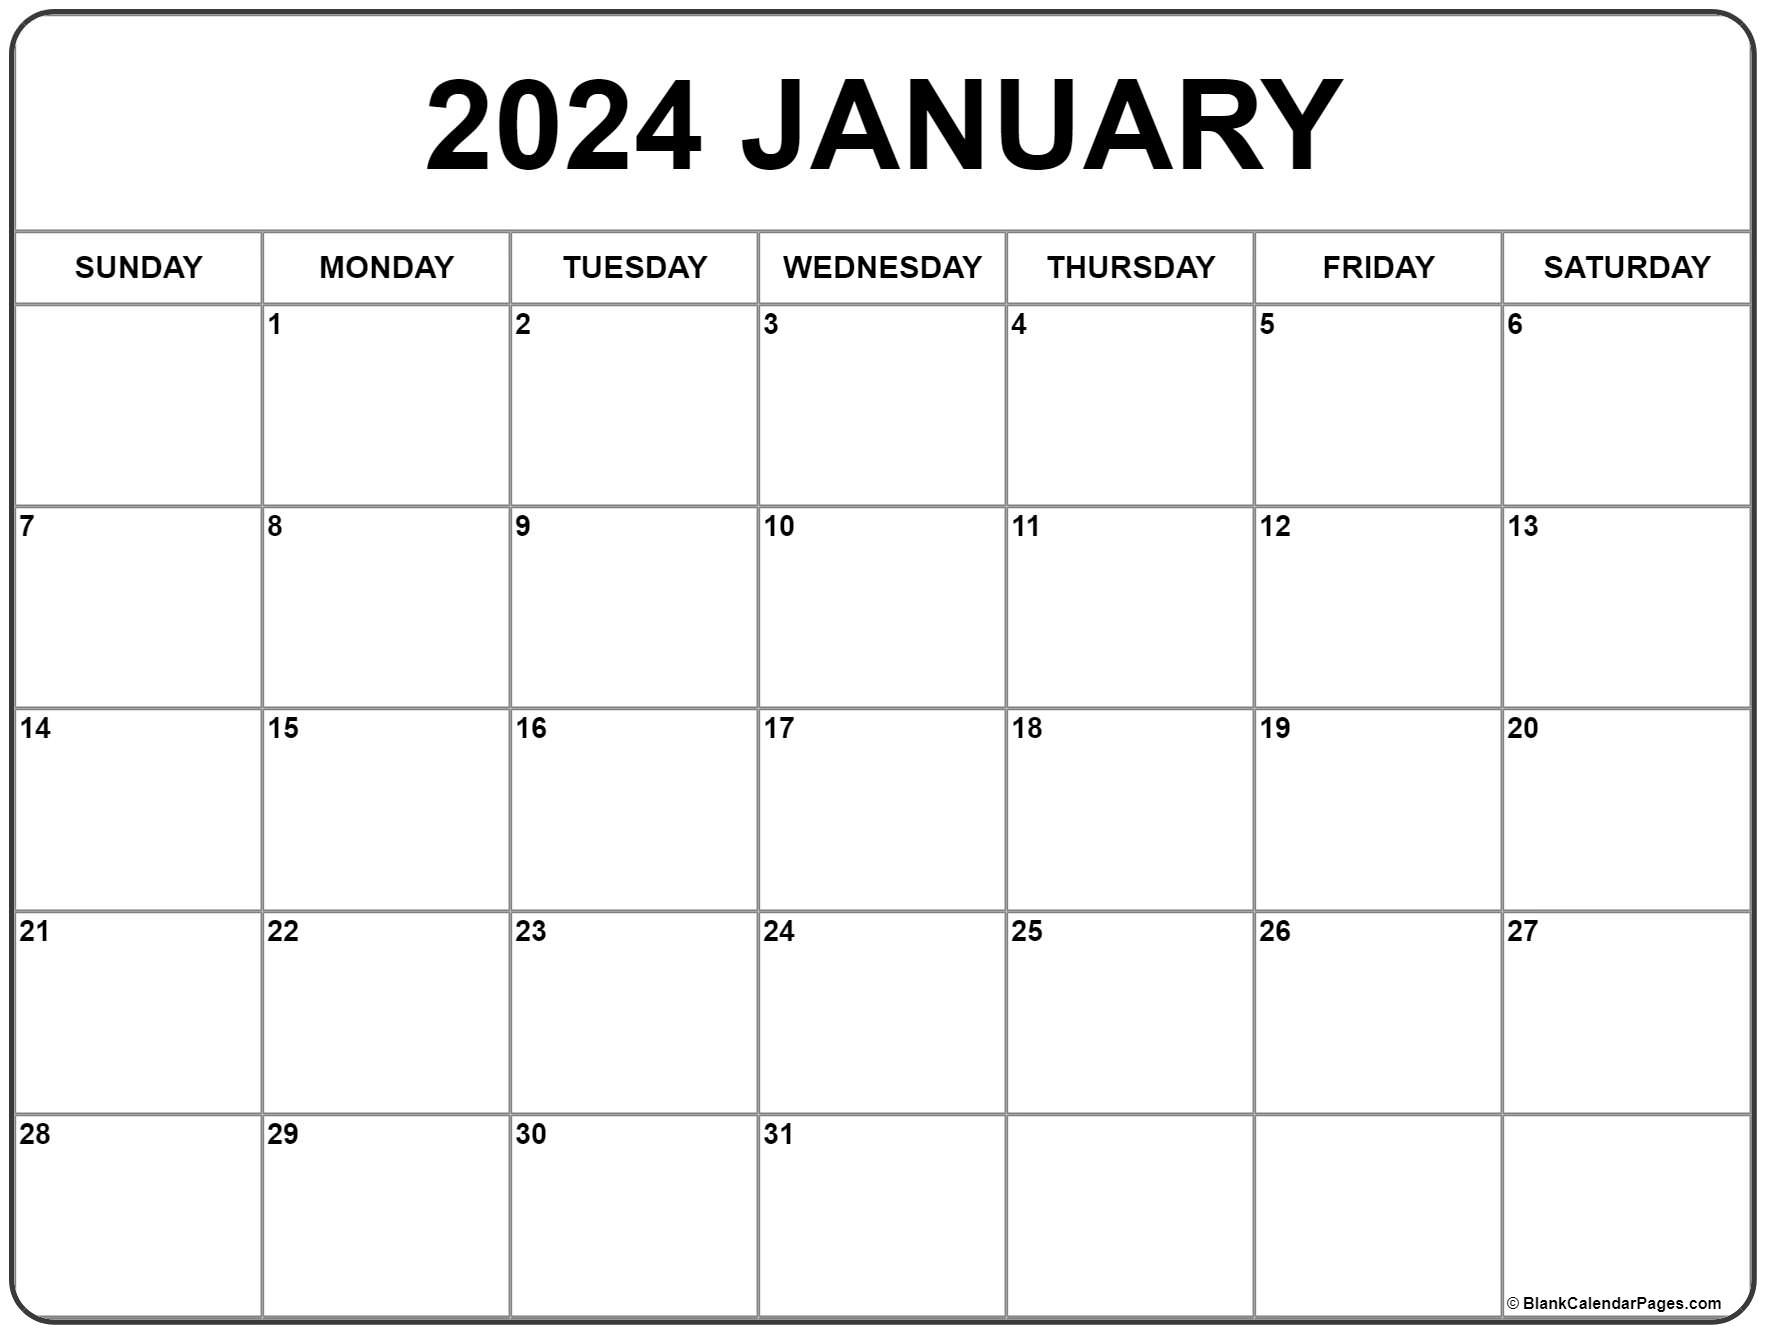 January 2024 Calendar | Free Printable Calendar for 2024 Jan Calendar Printable